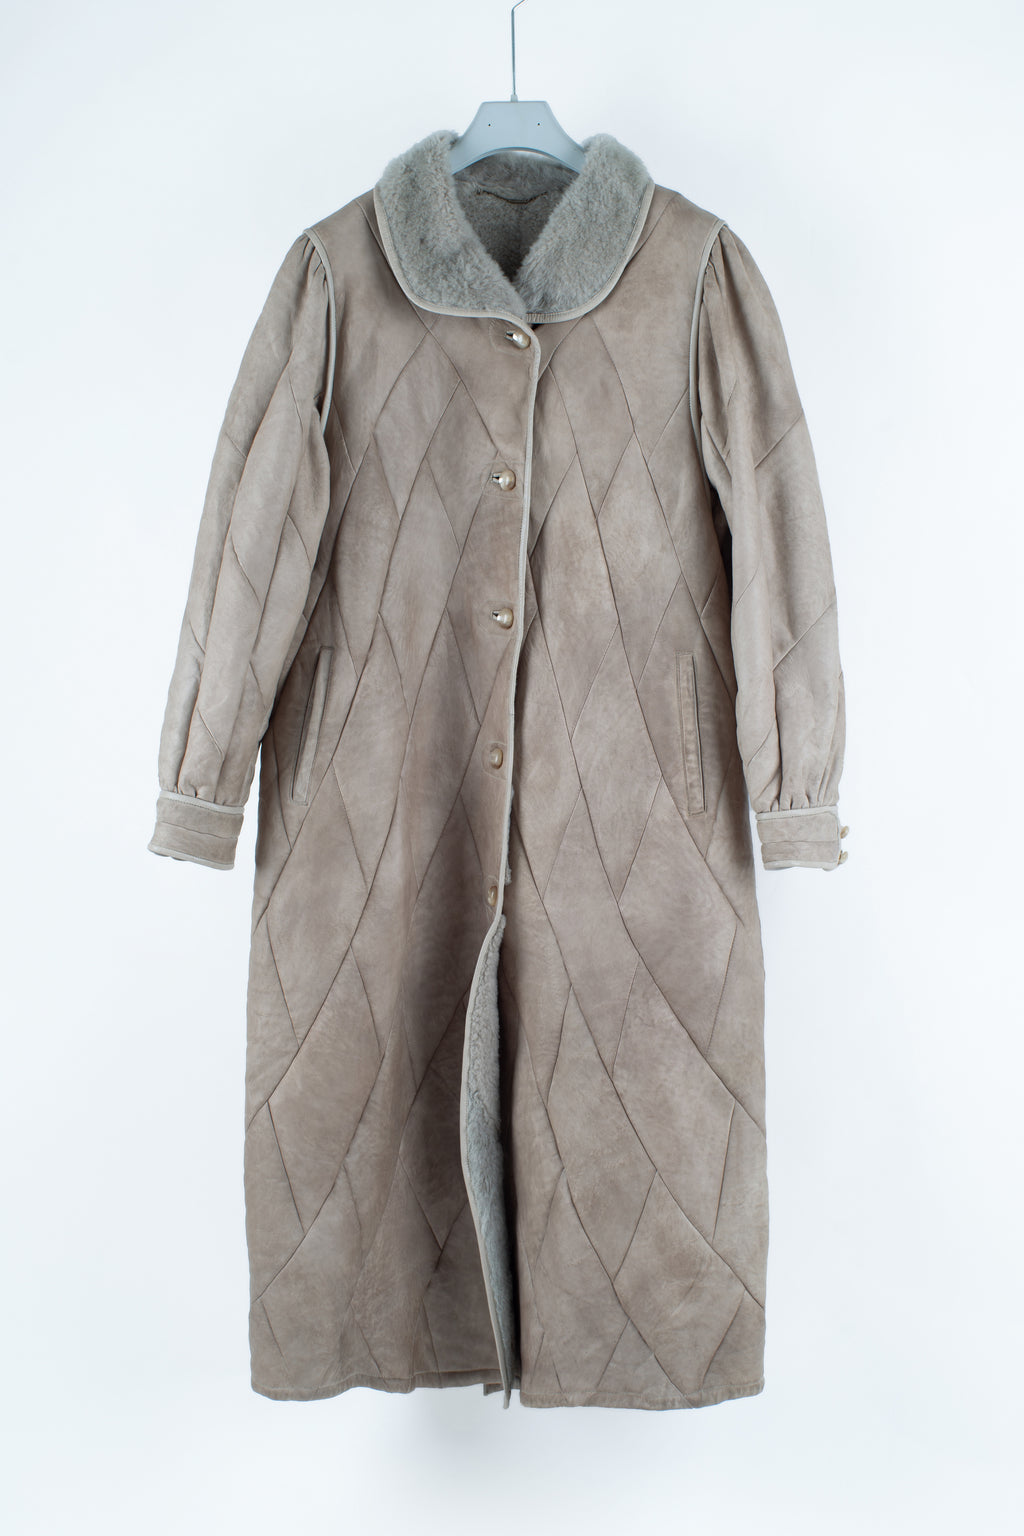 Women's Long Gray Elegant Shearling Coat with Puff Shoulders, Size L